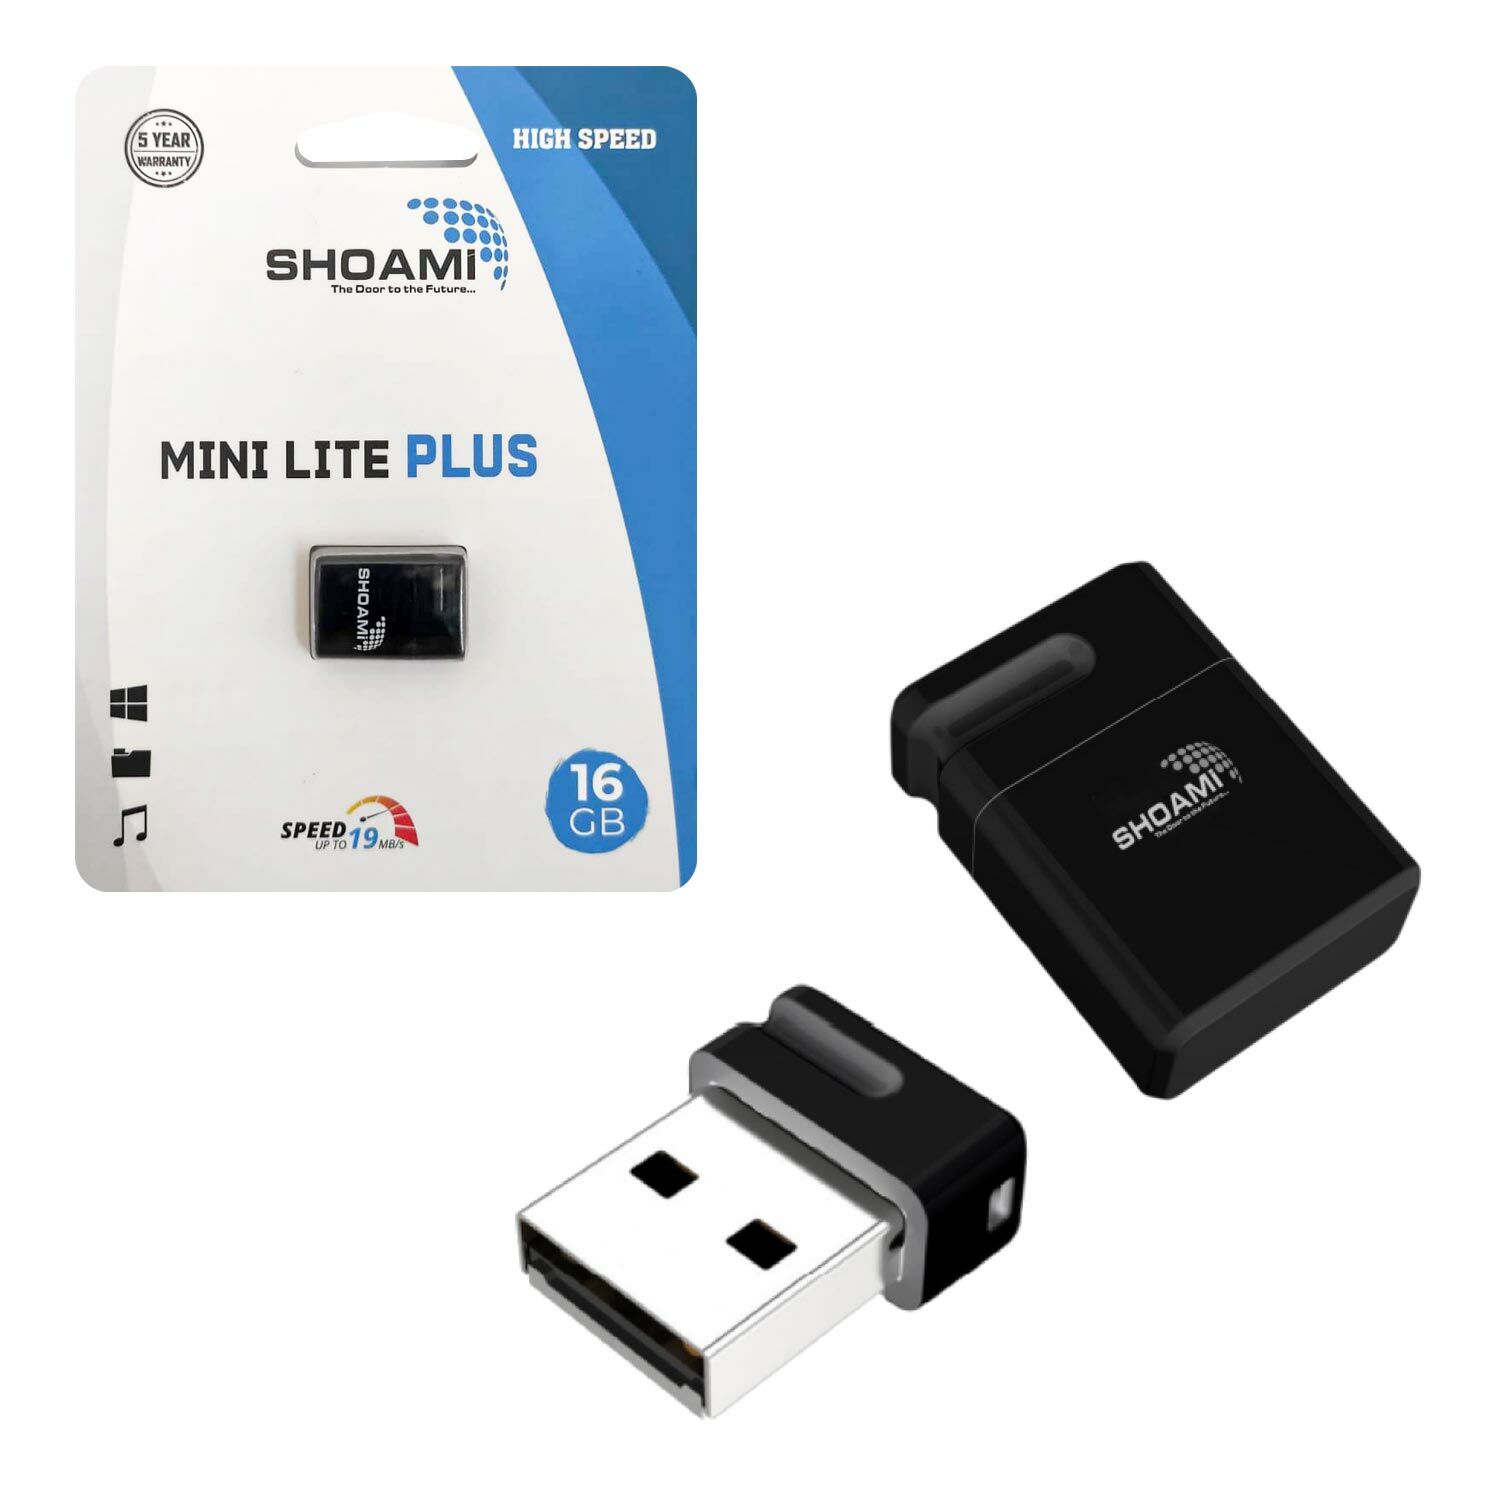 USB FLASH BELLEK 16GB MİNİ LITE PLUS SHOAMİ SH-UM16